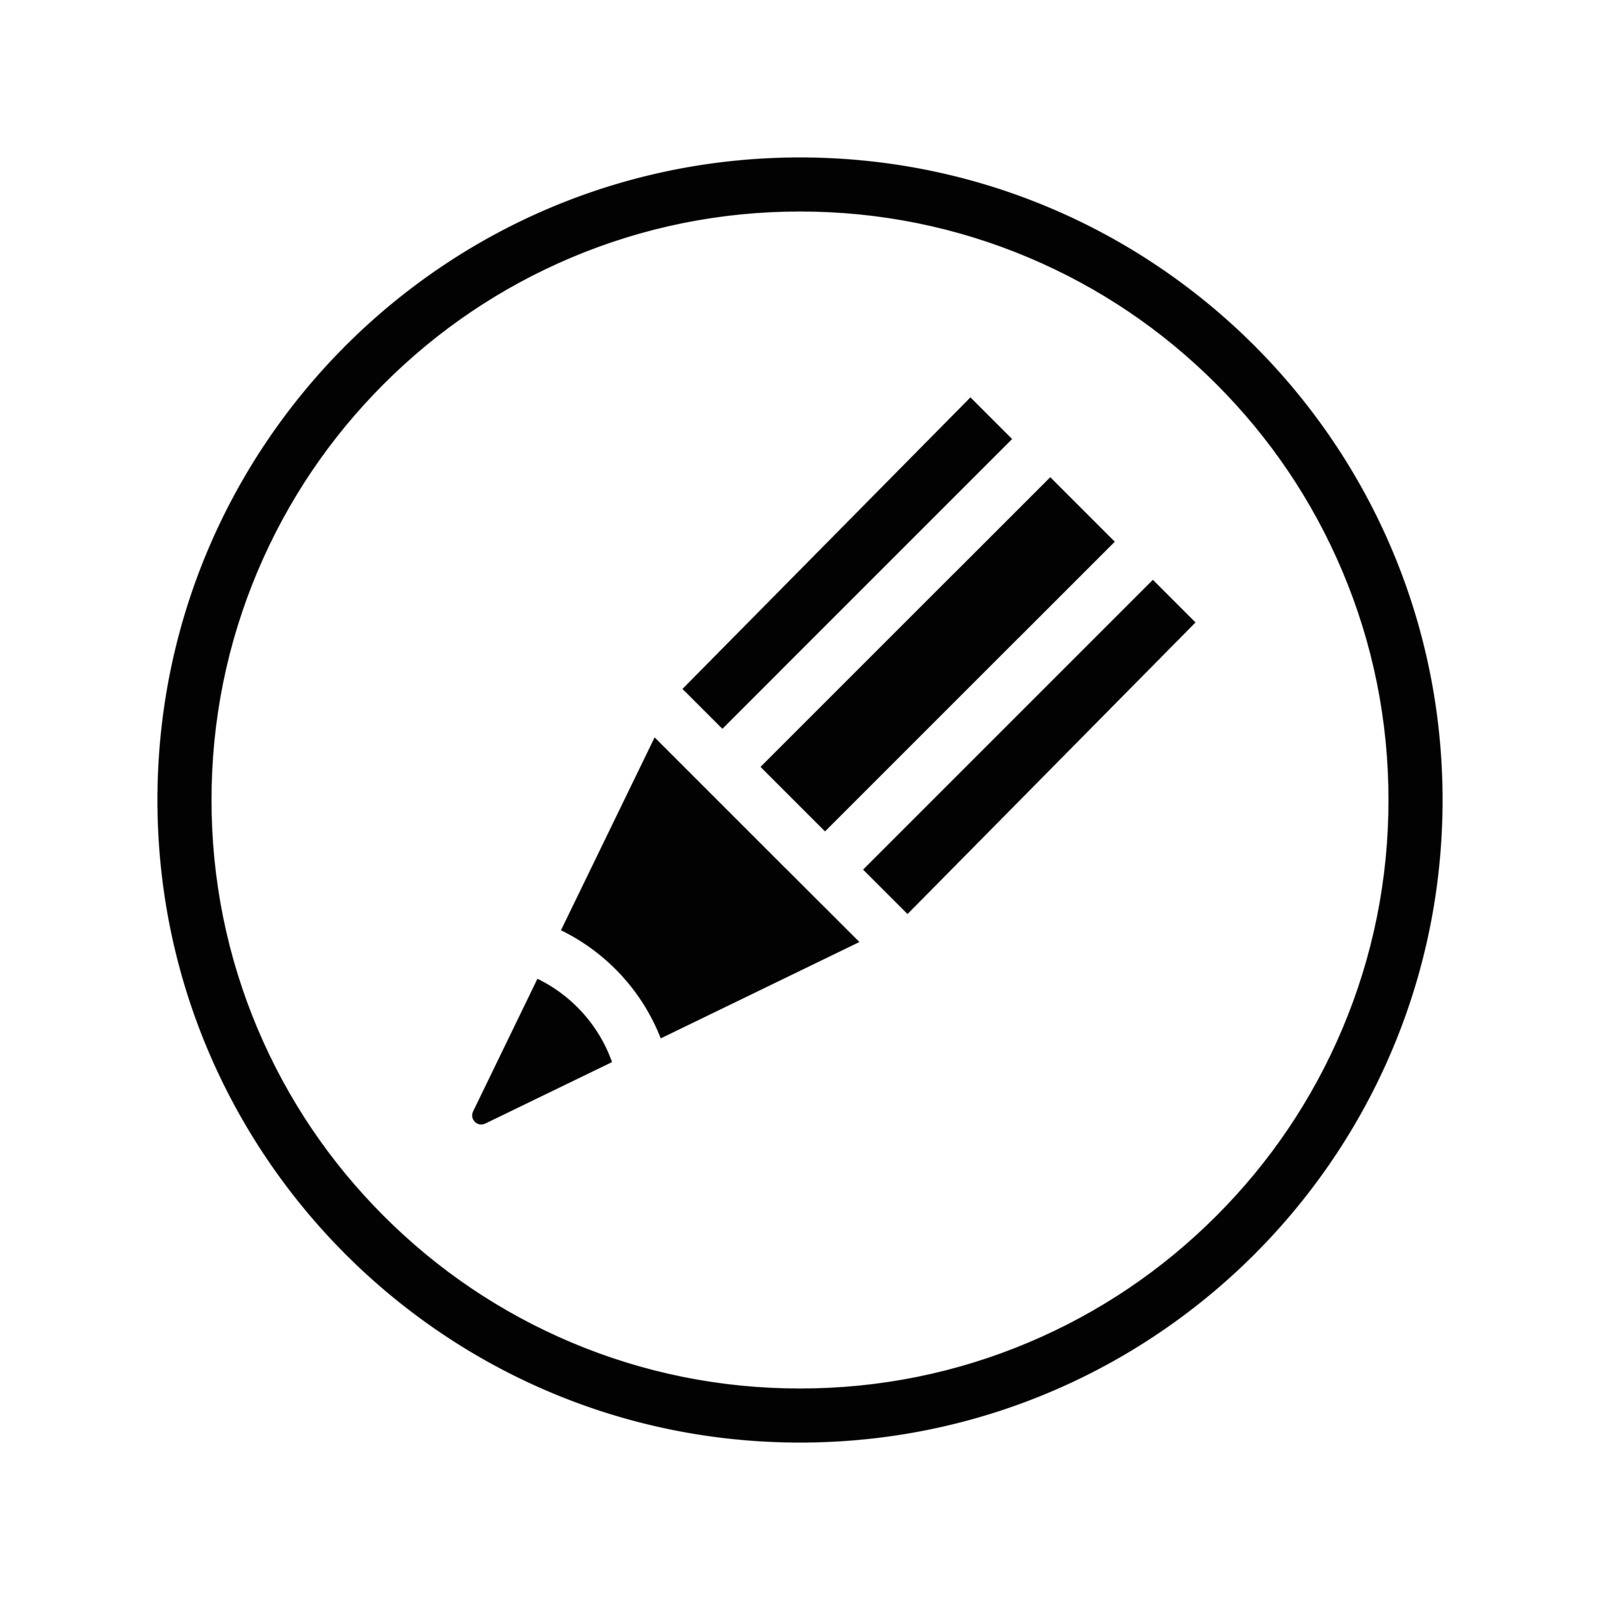 Pencil icon - vector iconic design by solargaria